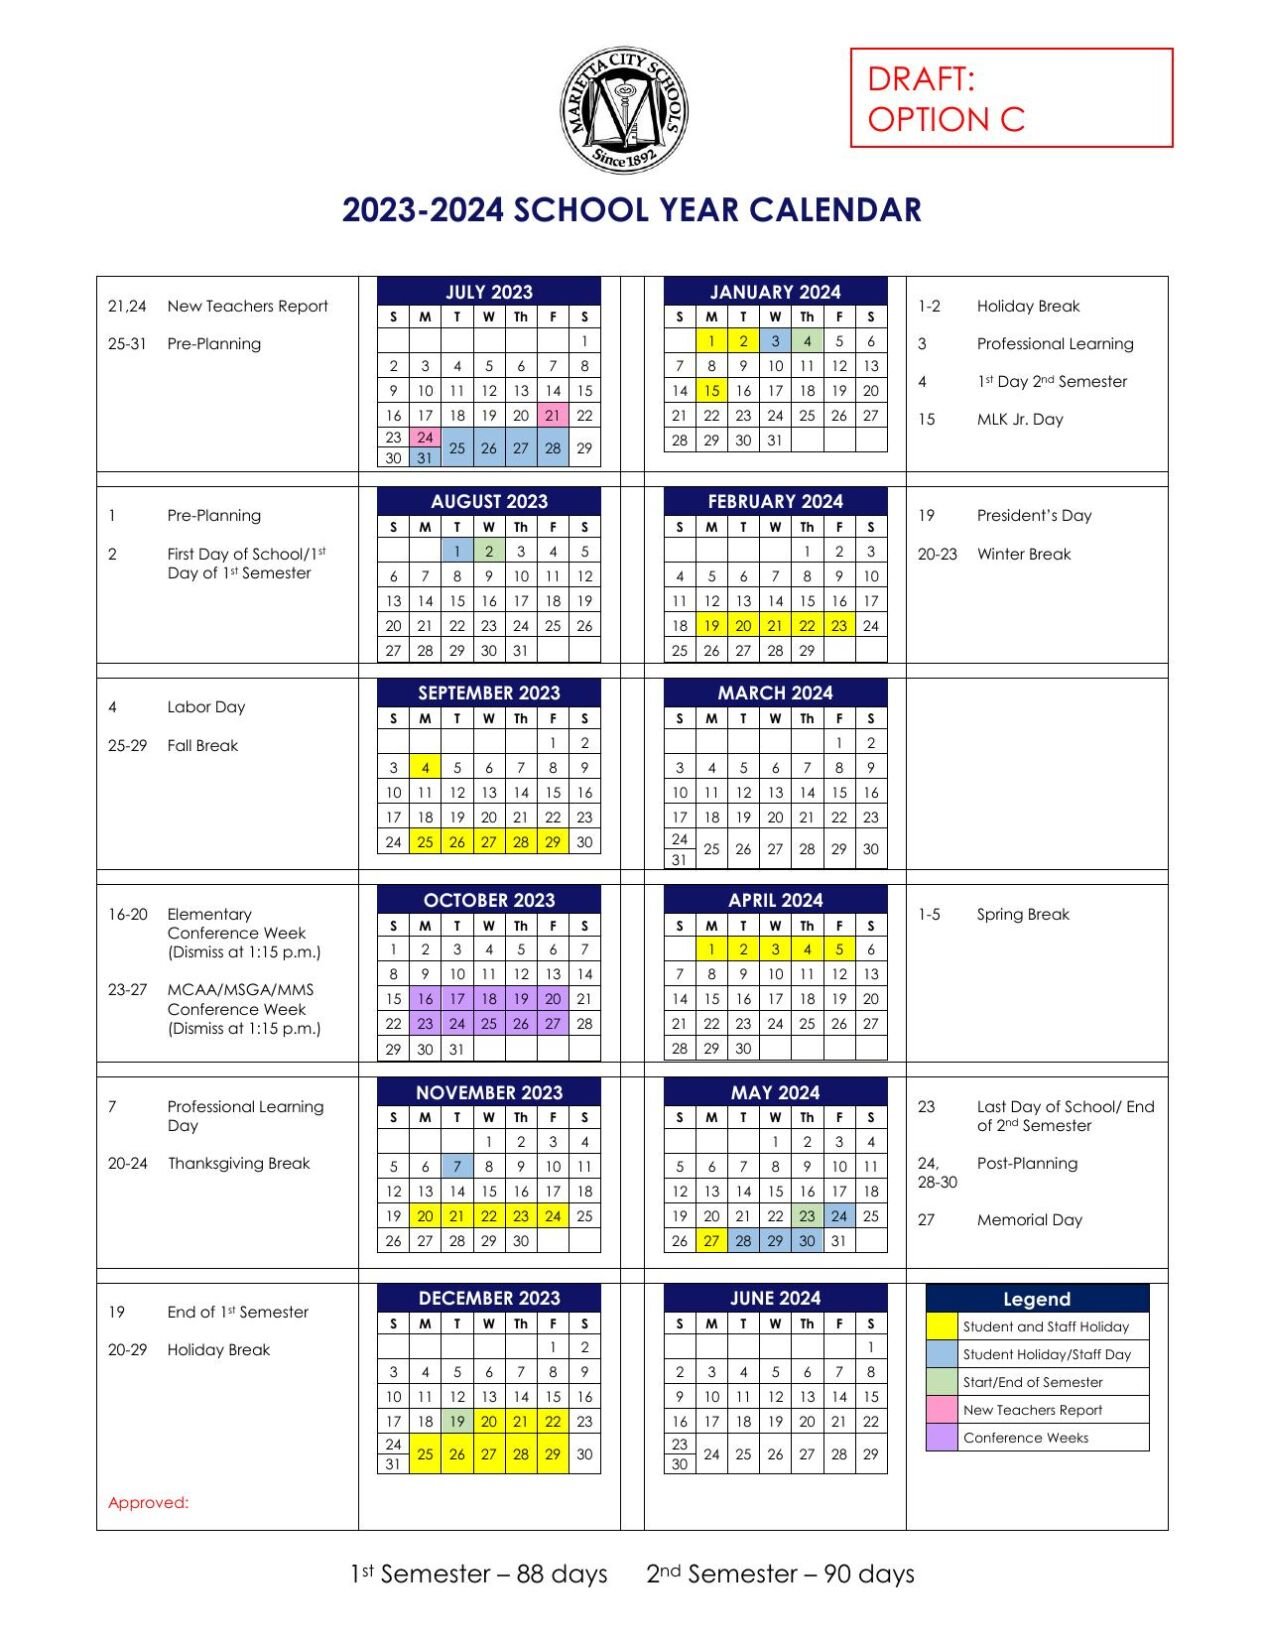 Delaware State University Academic Calendar 2022 2023 2023-24 Marietta Schools Calendar Option C | | Mdjonline.com